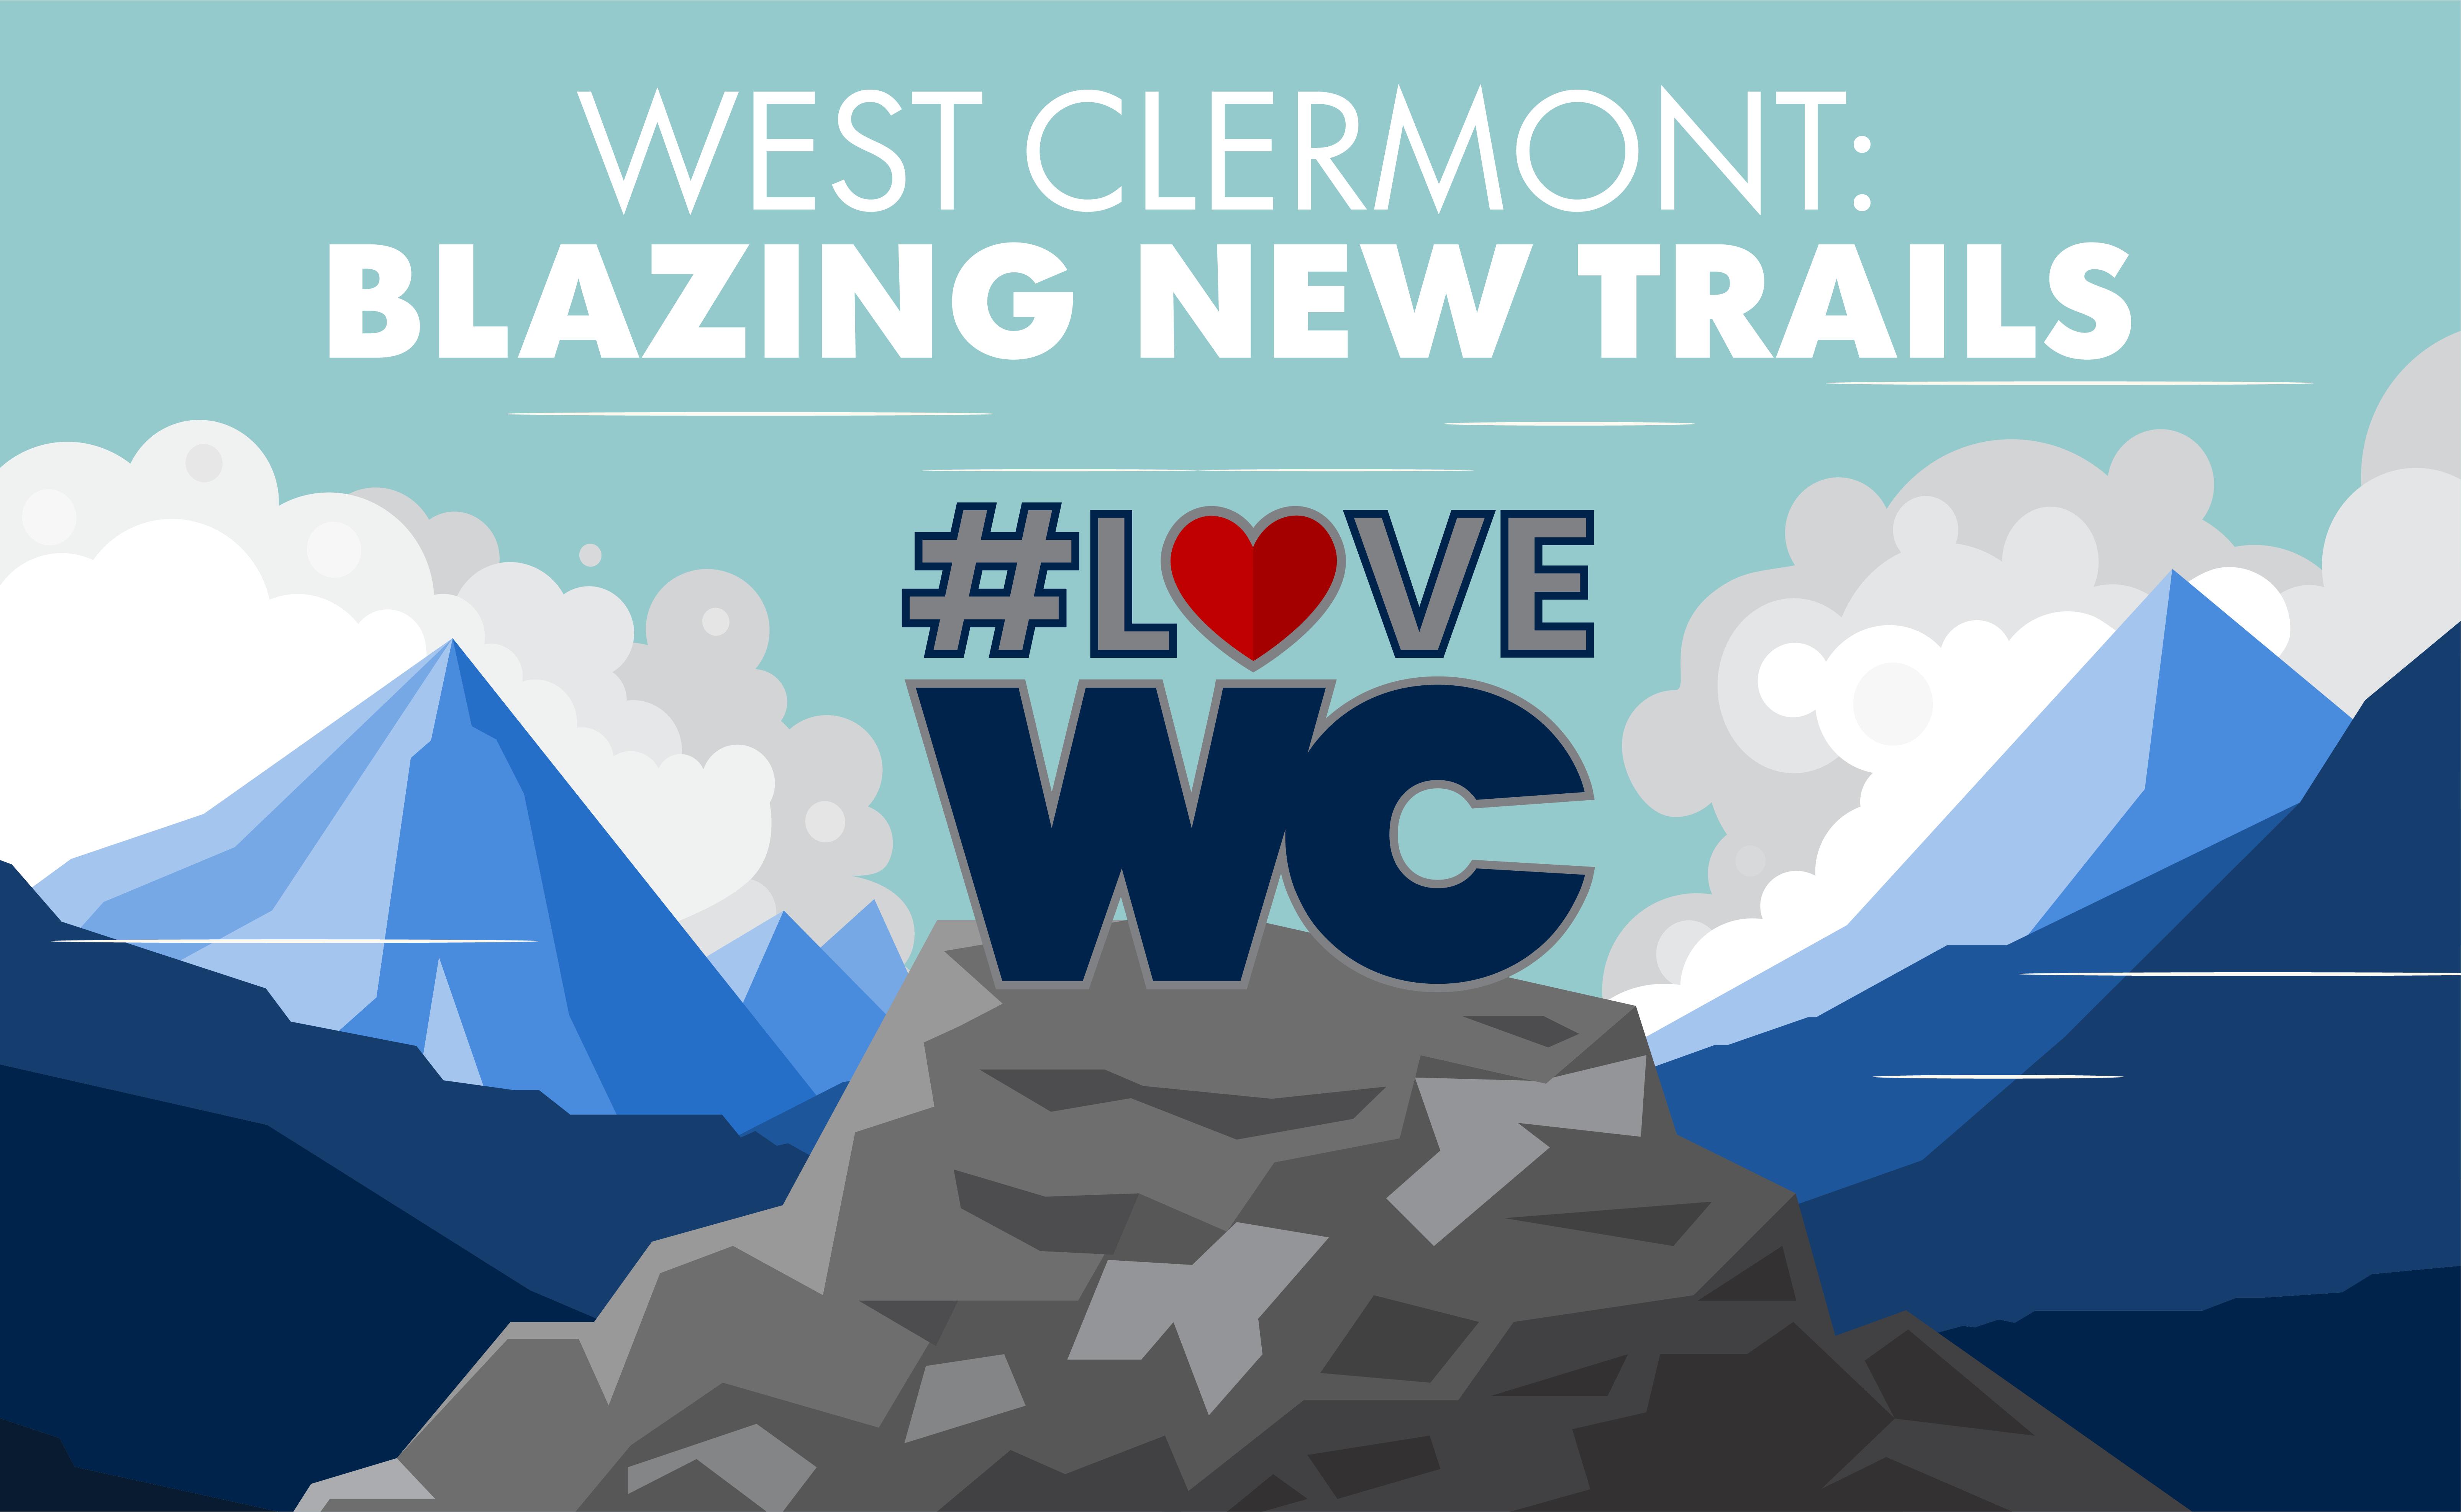 West Clermont: Blazing New Trails